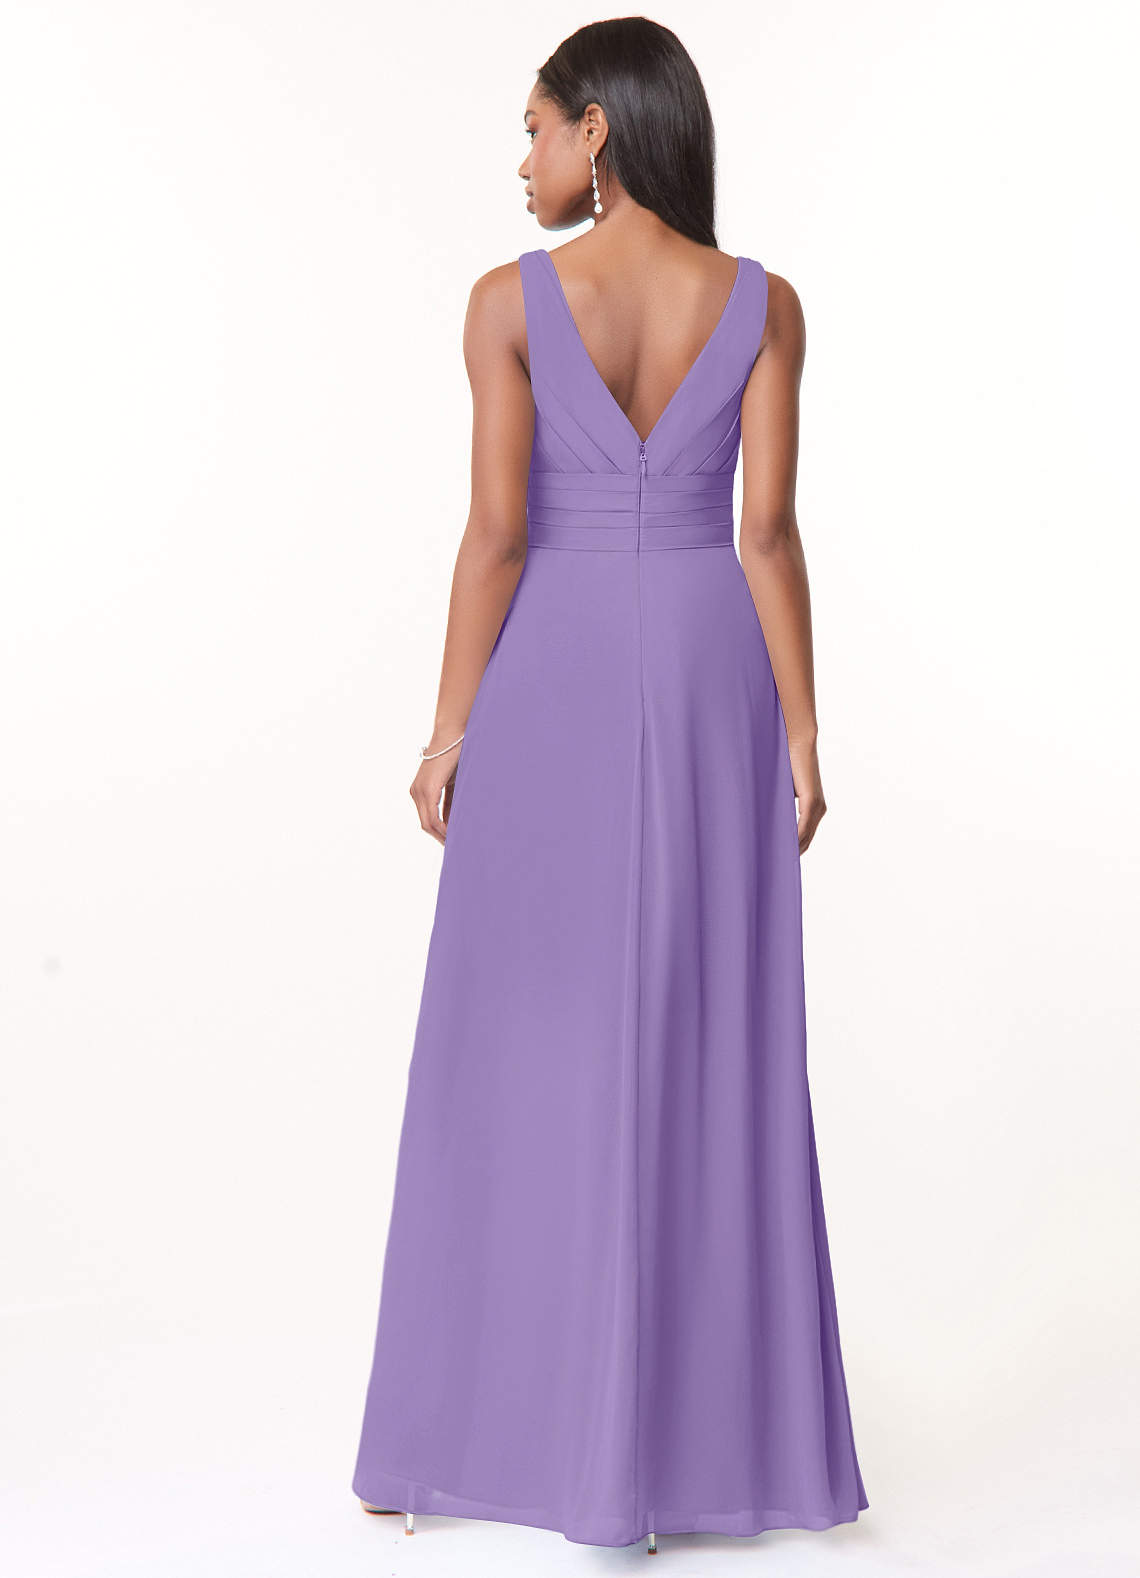 Azazie Julianna Bridesmaid Dresses A-Line Chiffon Floor-Length Dress image1